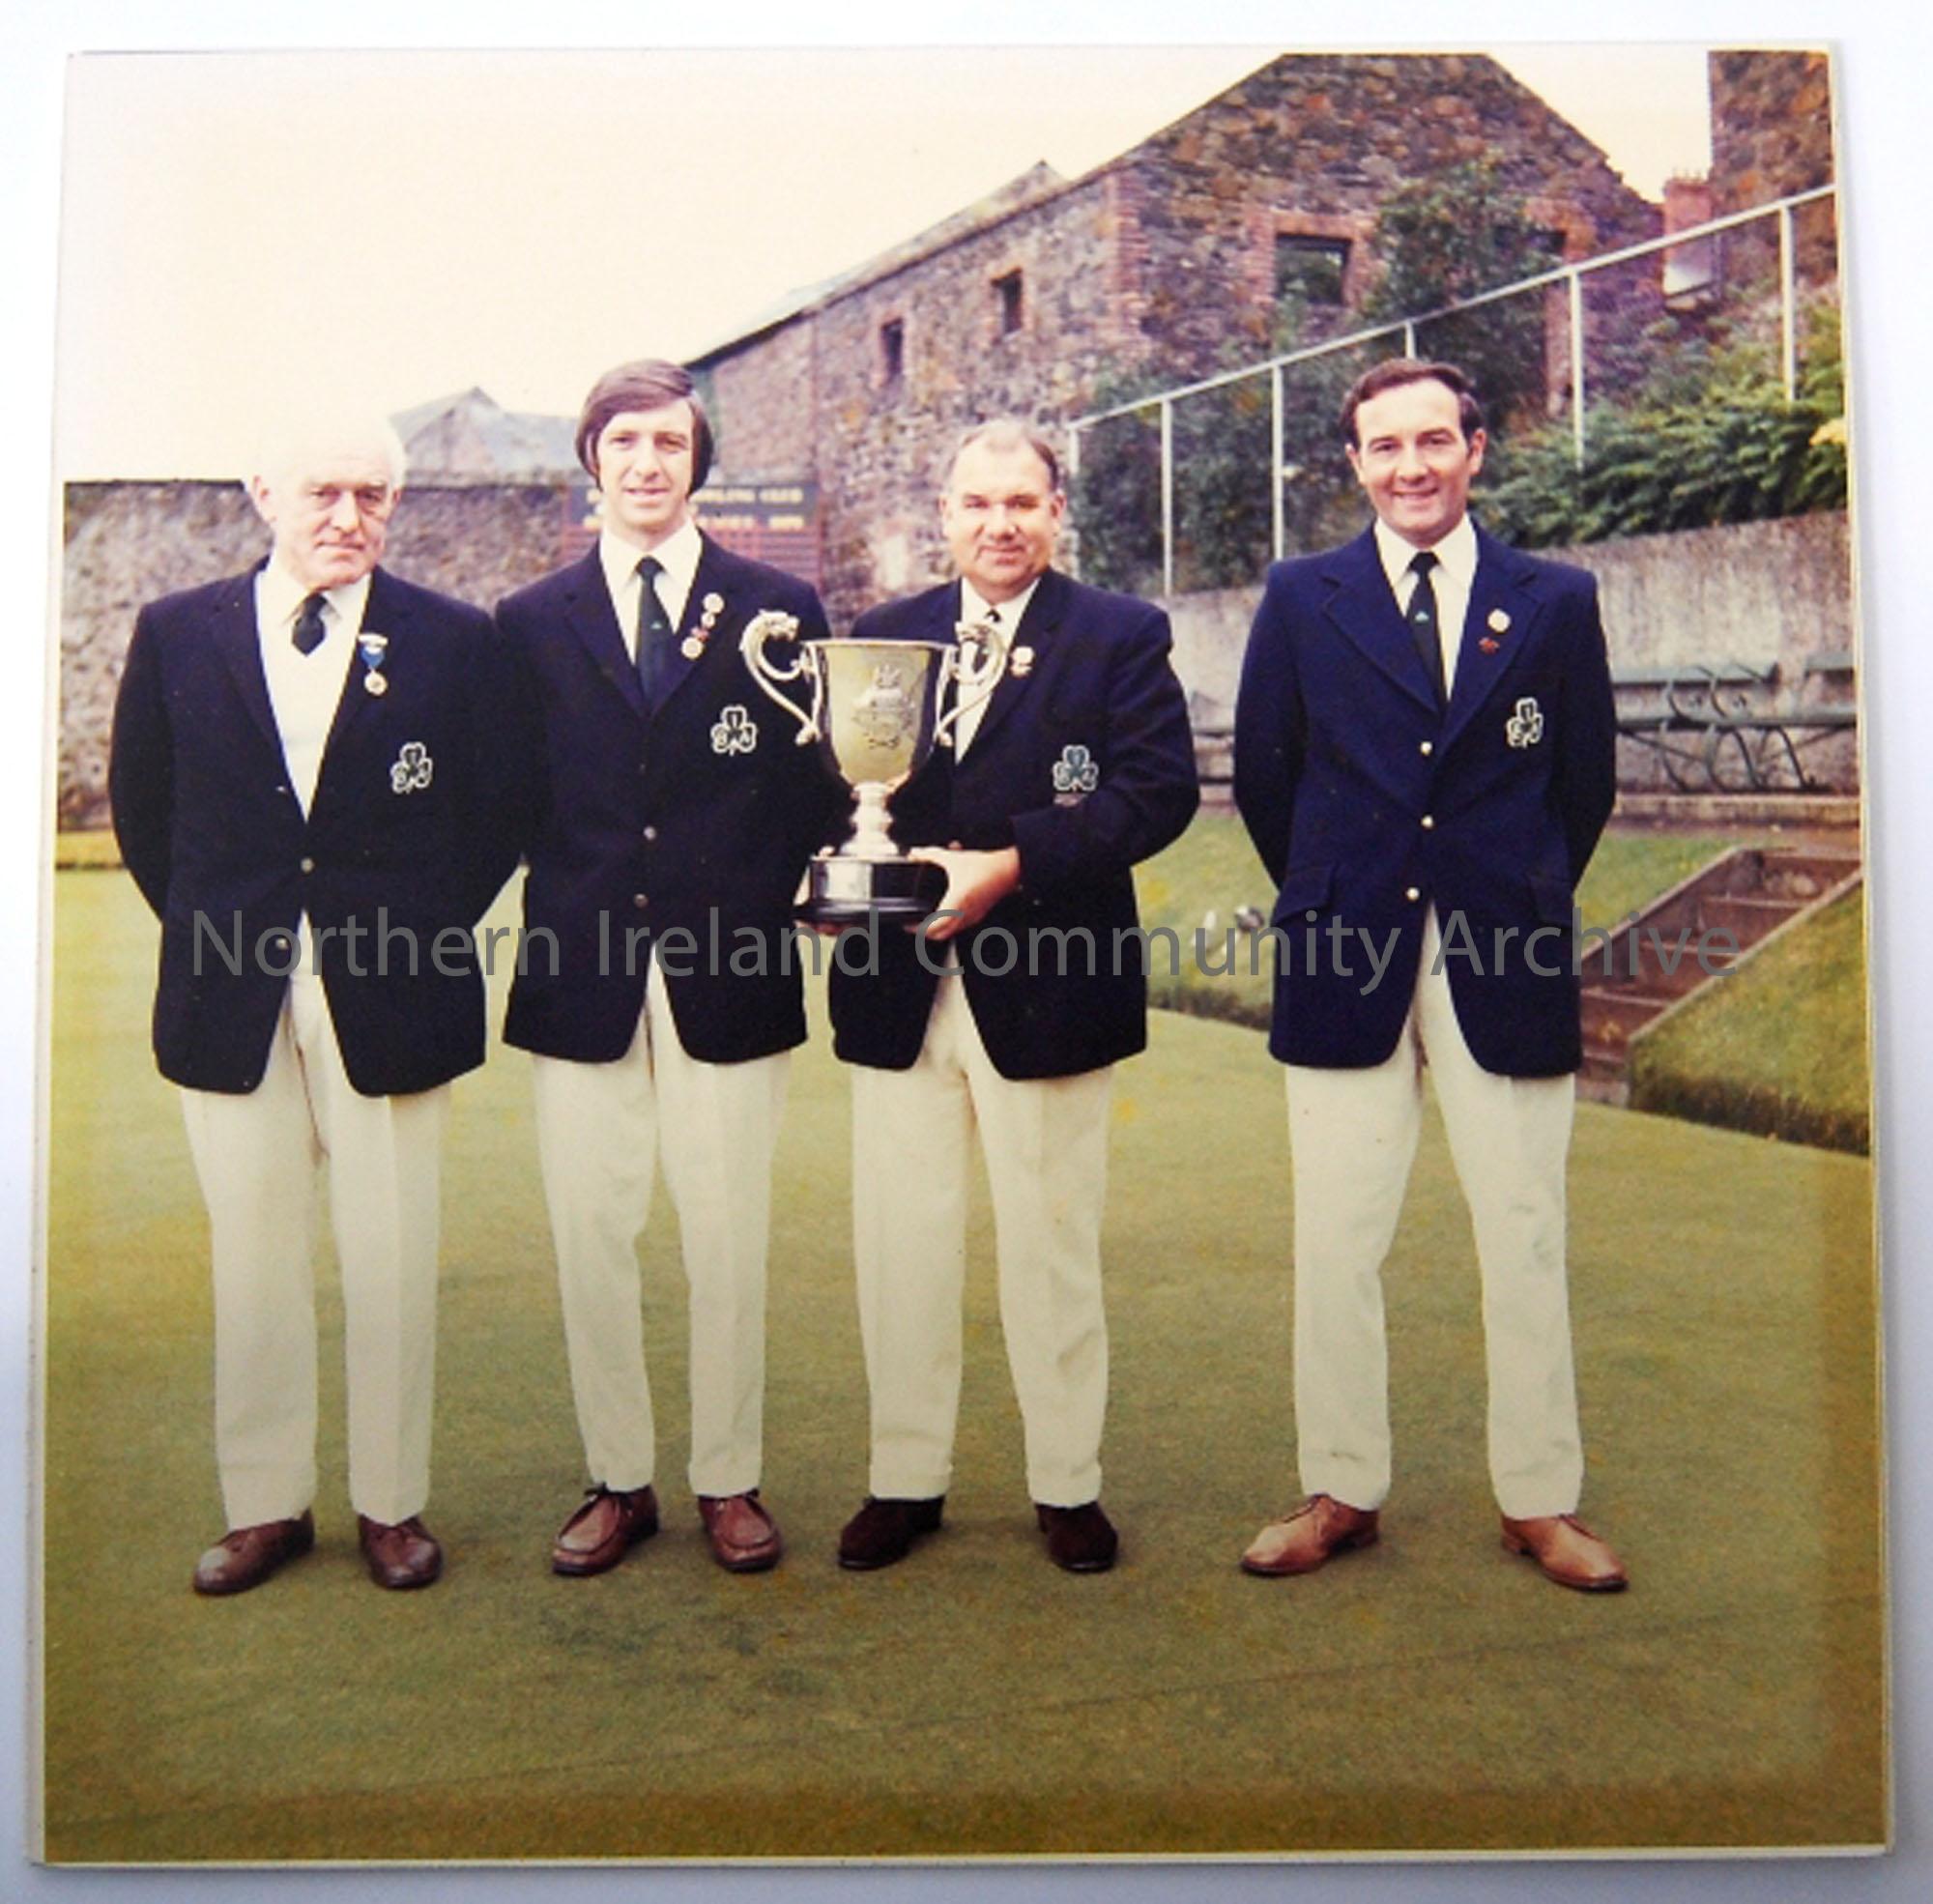 British Isles four Championship 1973, Ballymoney Bowling Team-left to right, Tom Boyd, William Harbinson, John Henry, Gordon woods.